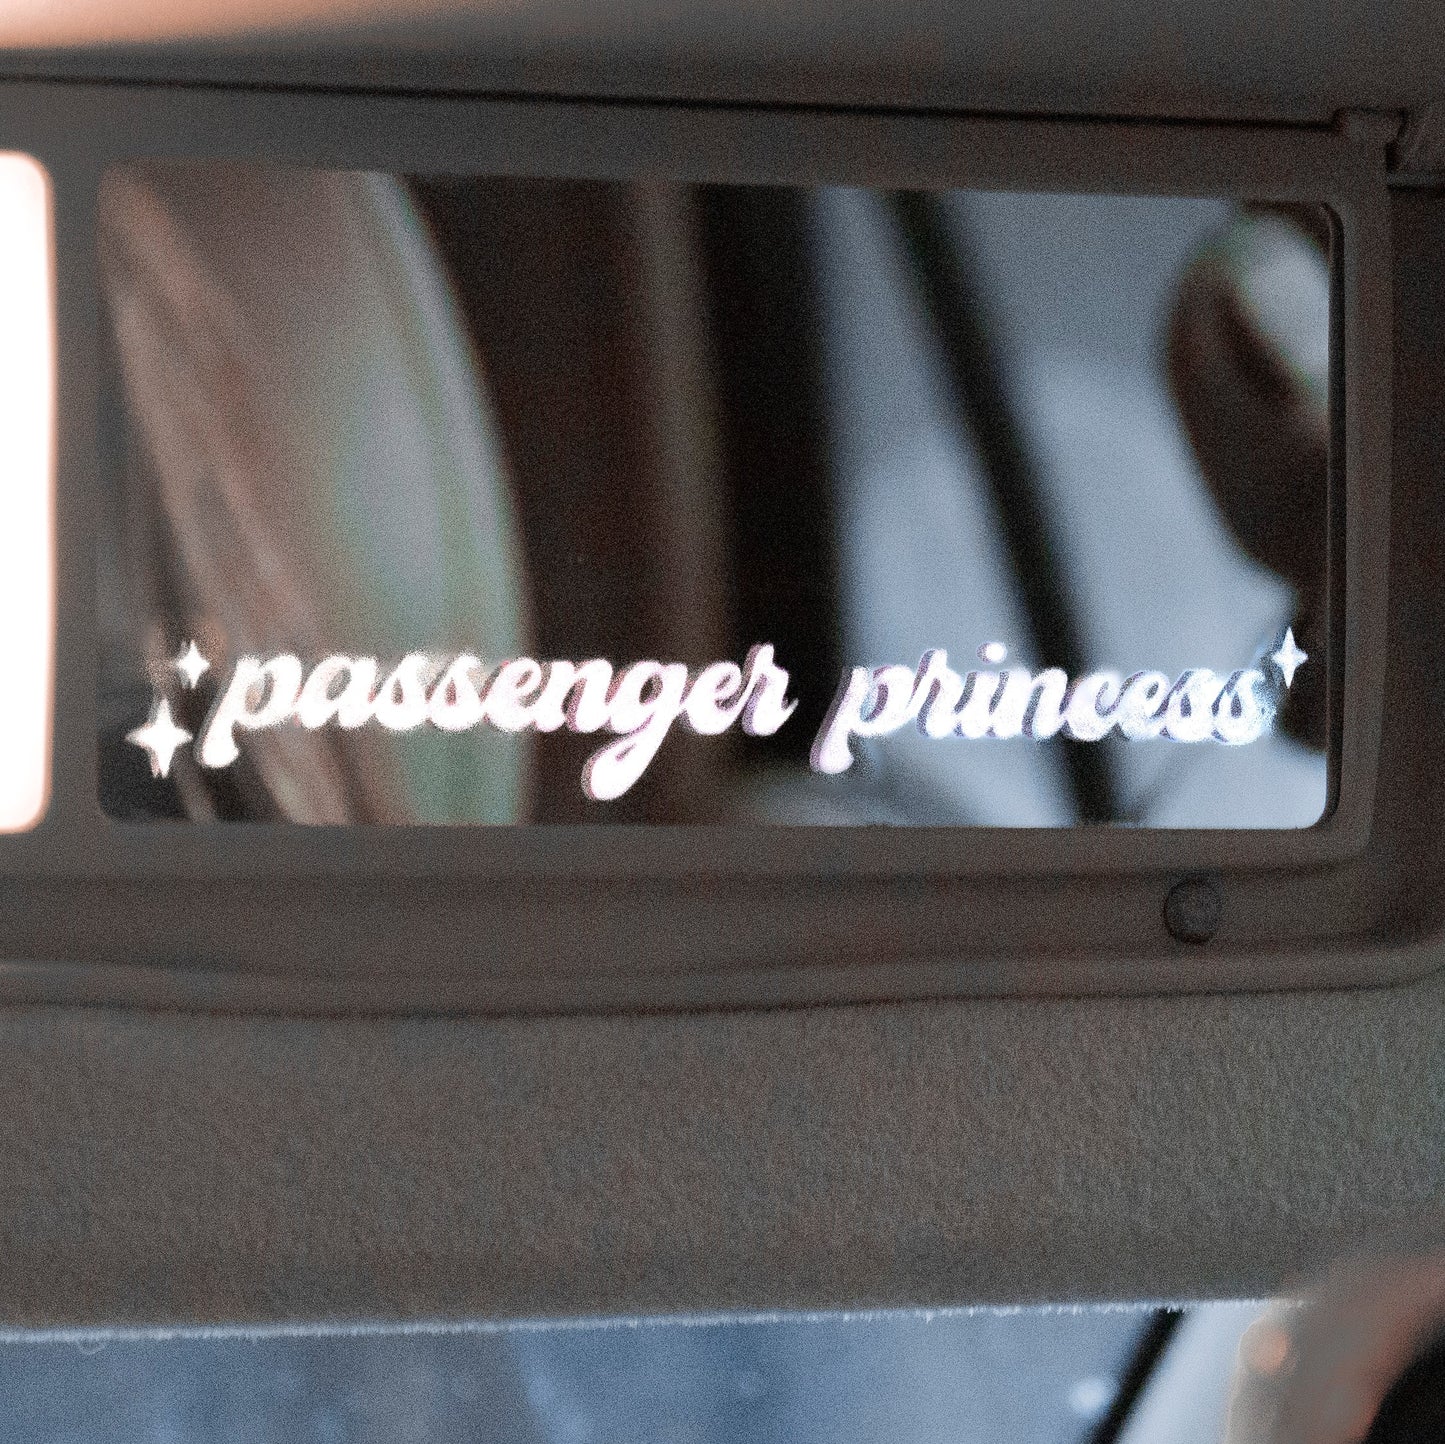 Passenger Princess Only Custom Vinyl Decal Sticker Choose Your